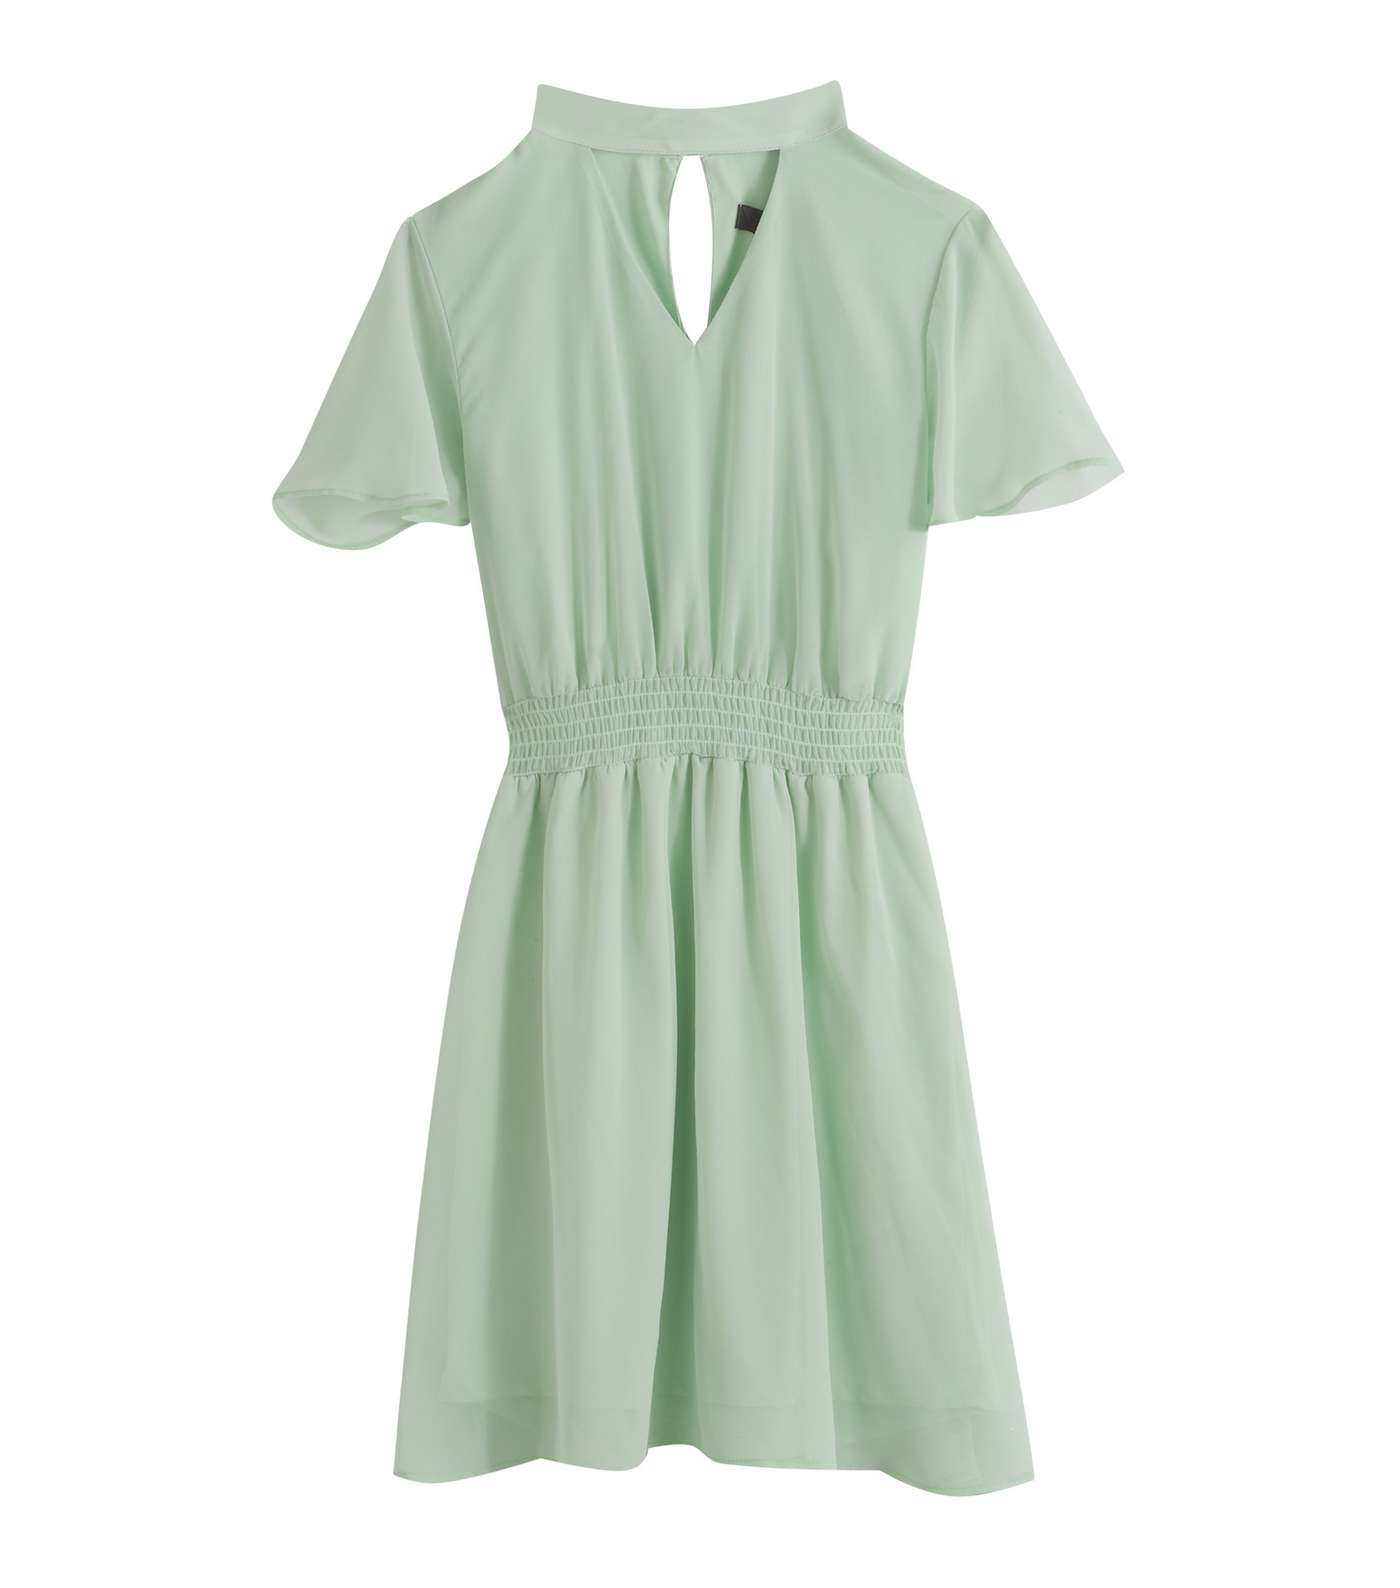 Girls Light Green Choker Chiffon Dress